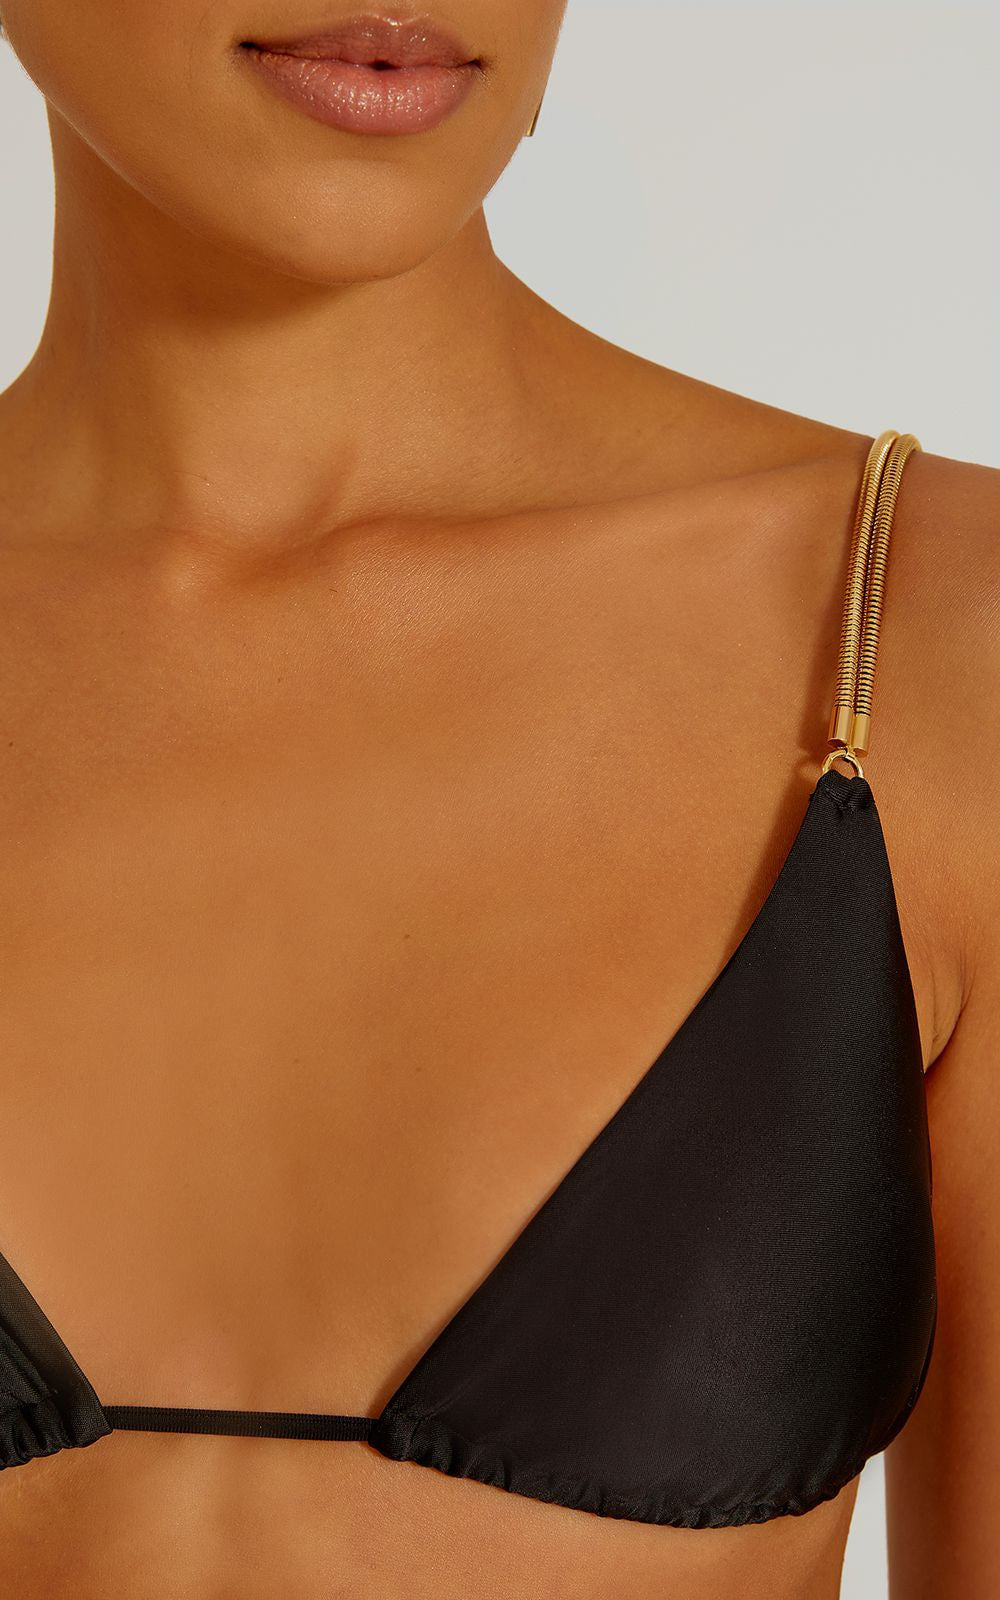 Lenny Niemeyer Cortina Chain Triangle Bikini Top in Black